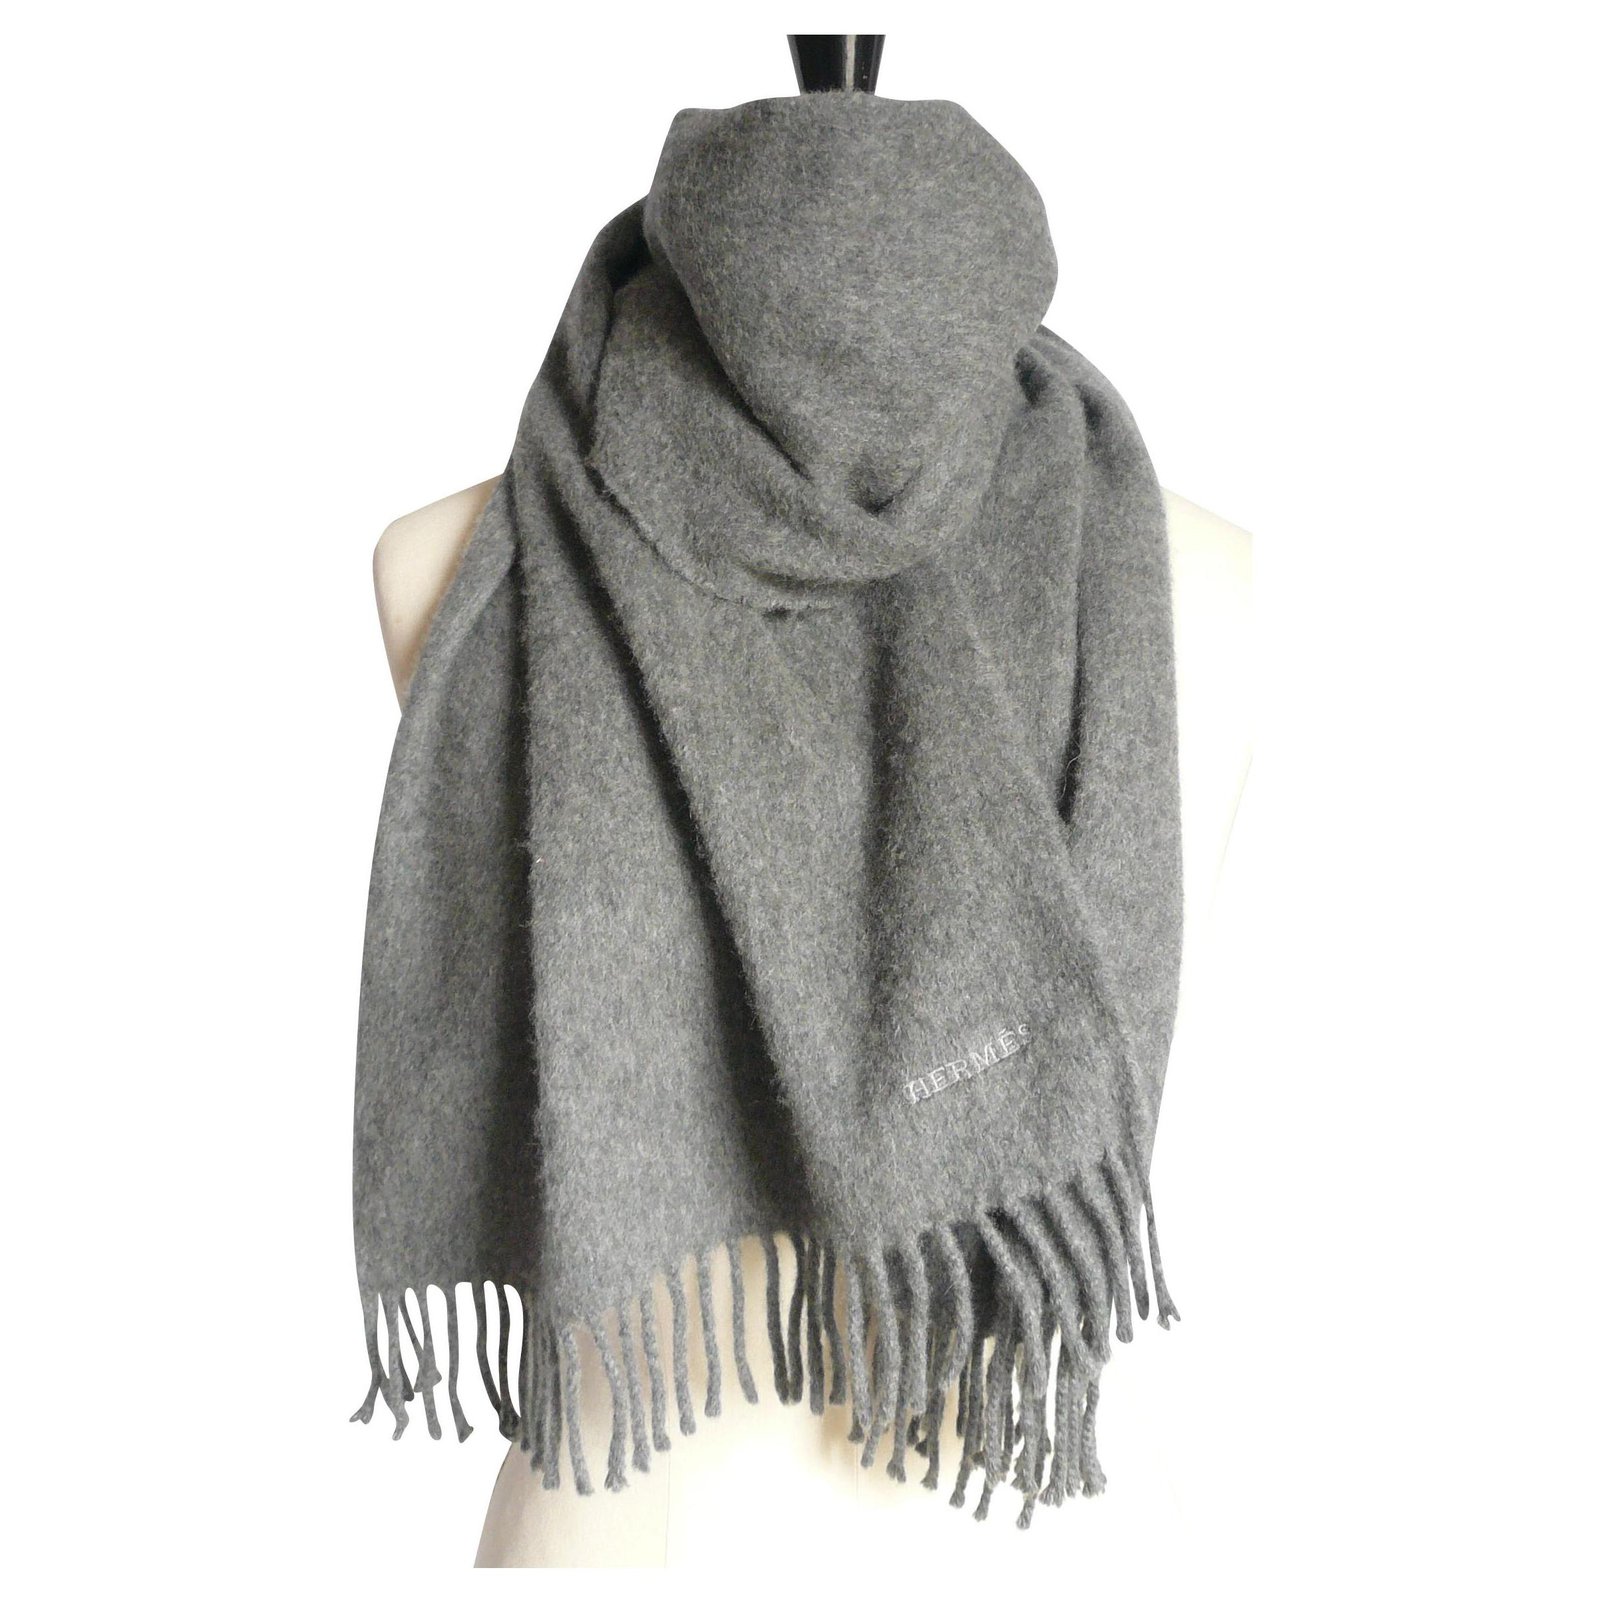 hermes cashmere scarf